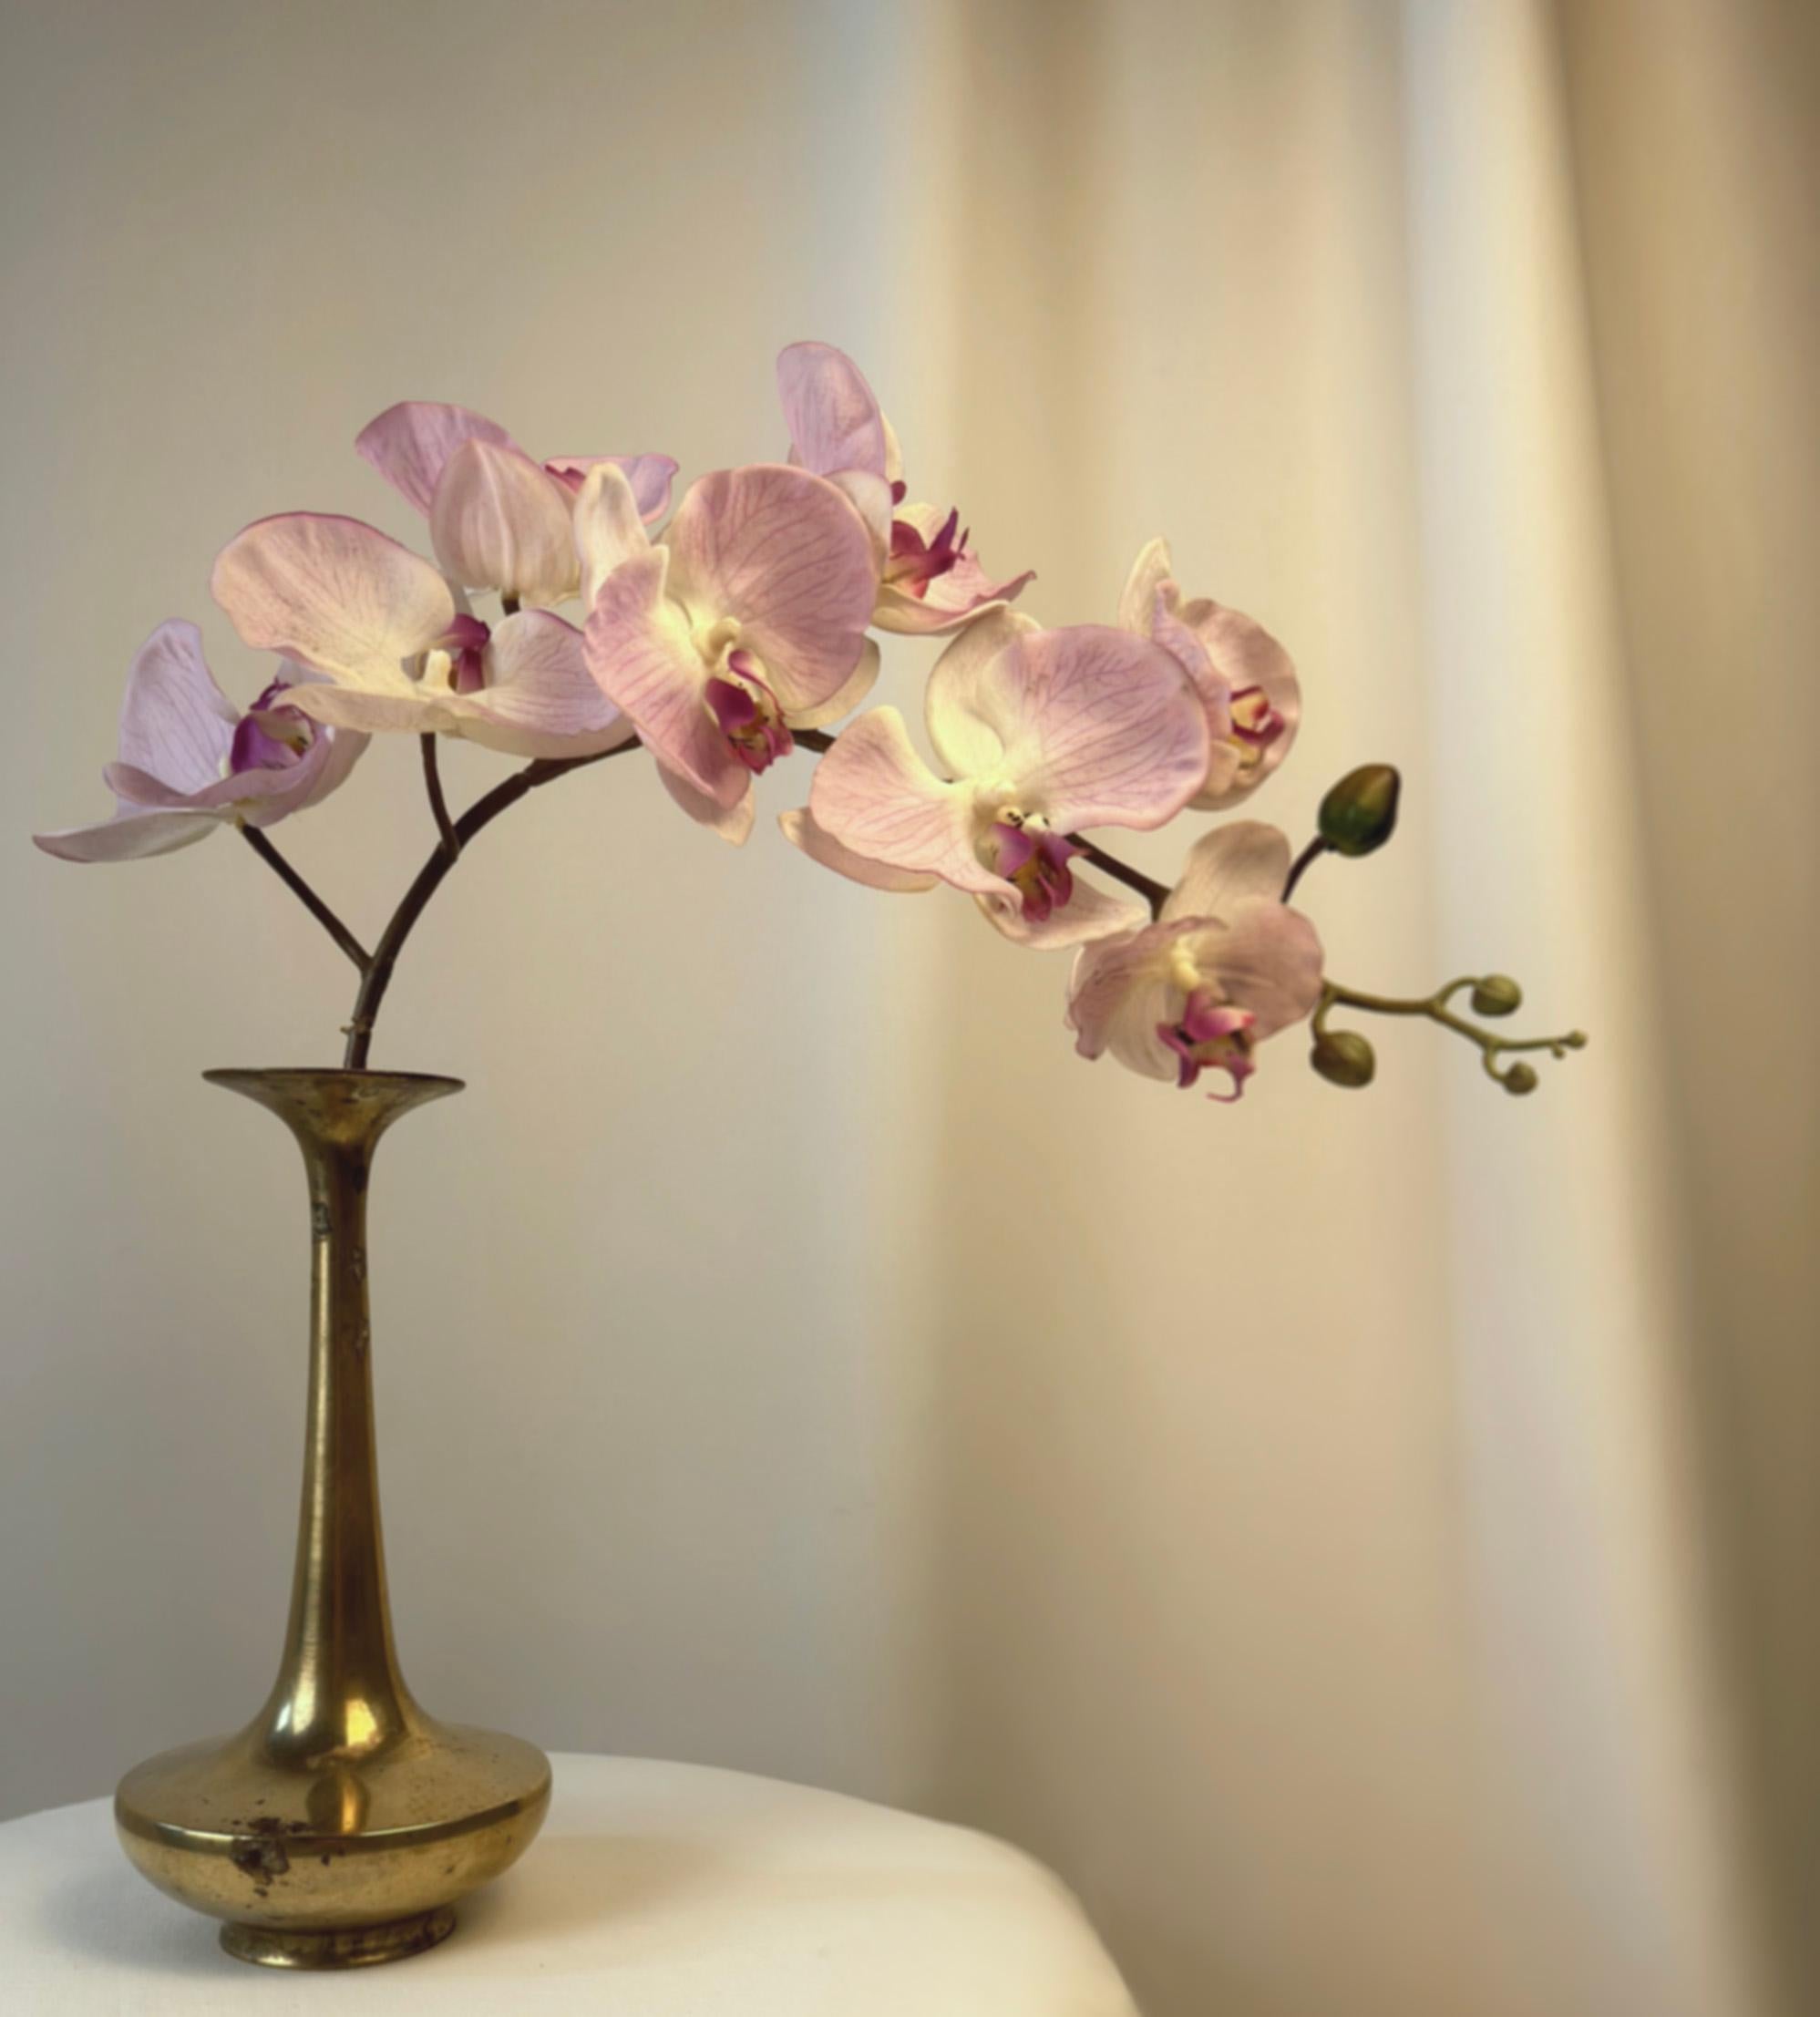 Early 20th Century Decorative Japanese Brass Bud Vase - Wabi Sabi - Patinated For Sale 3